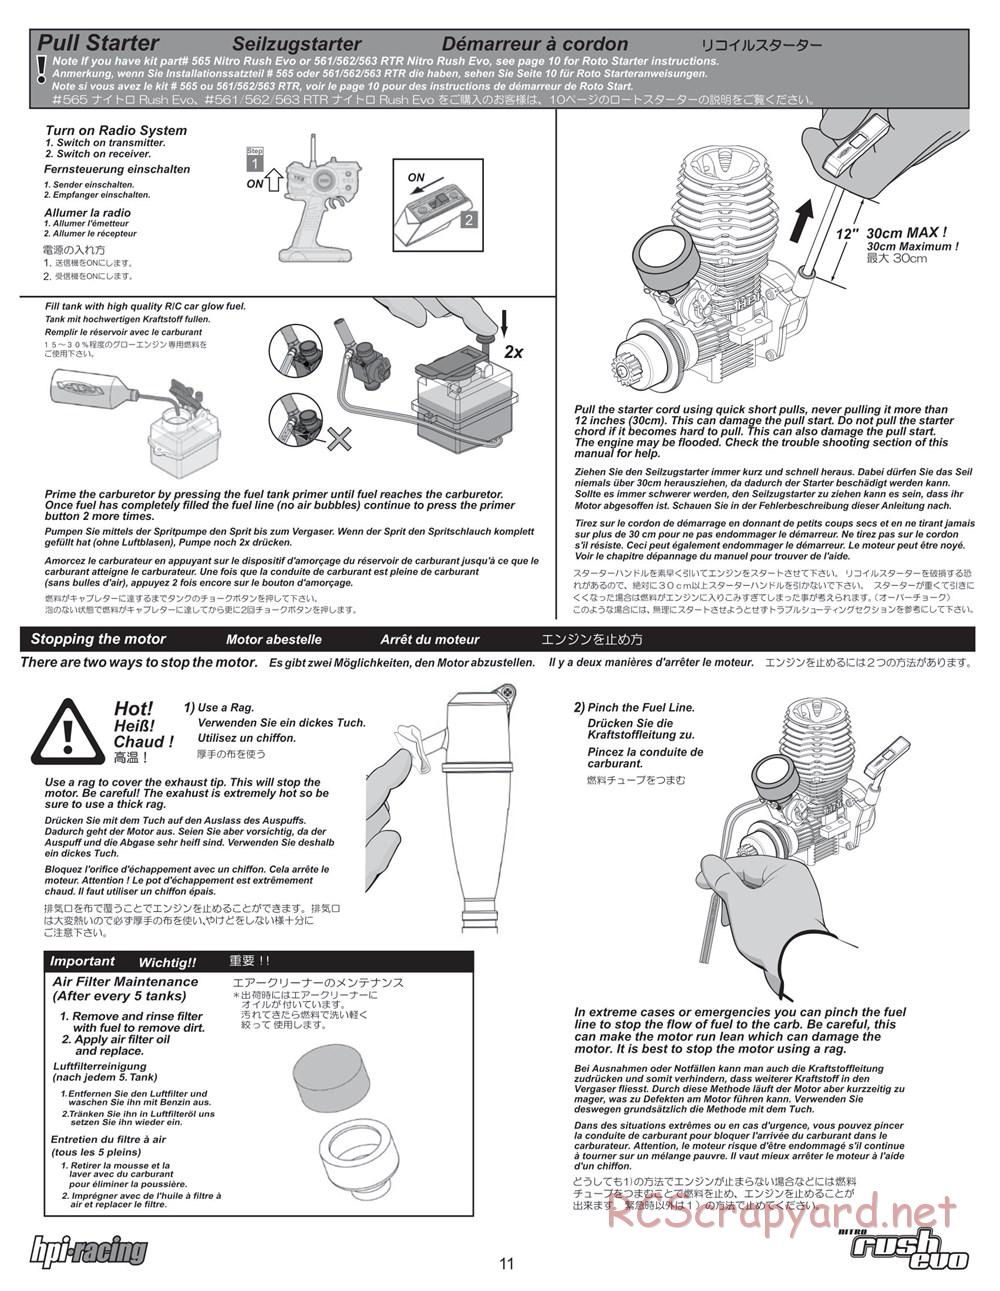 HPI - Nitro Rush Evo - Manual - Page 11